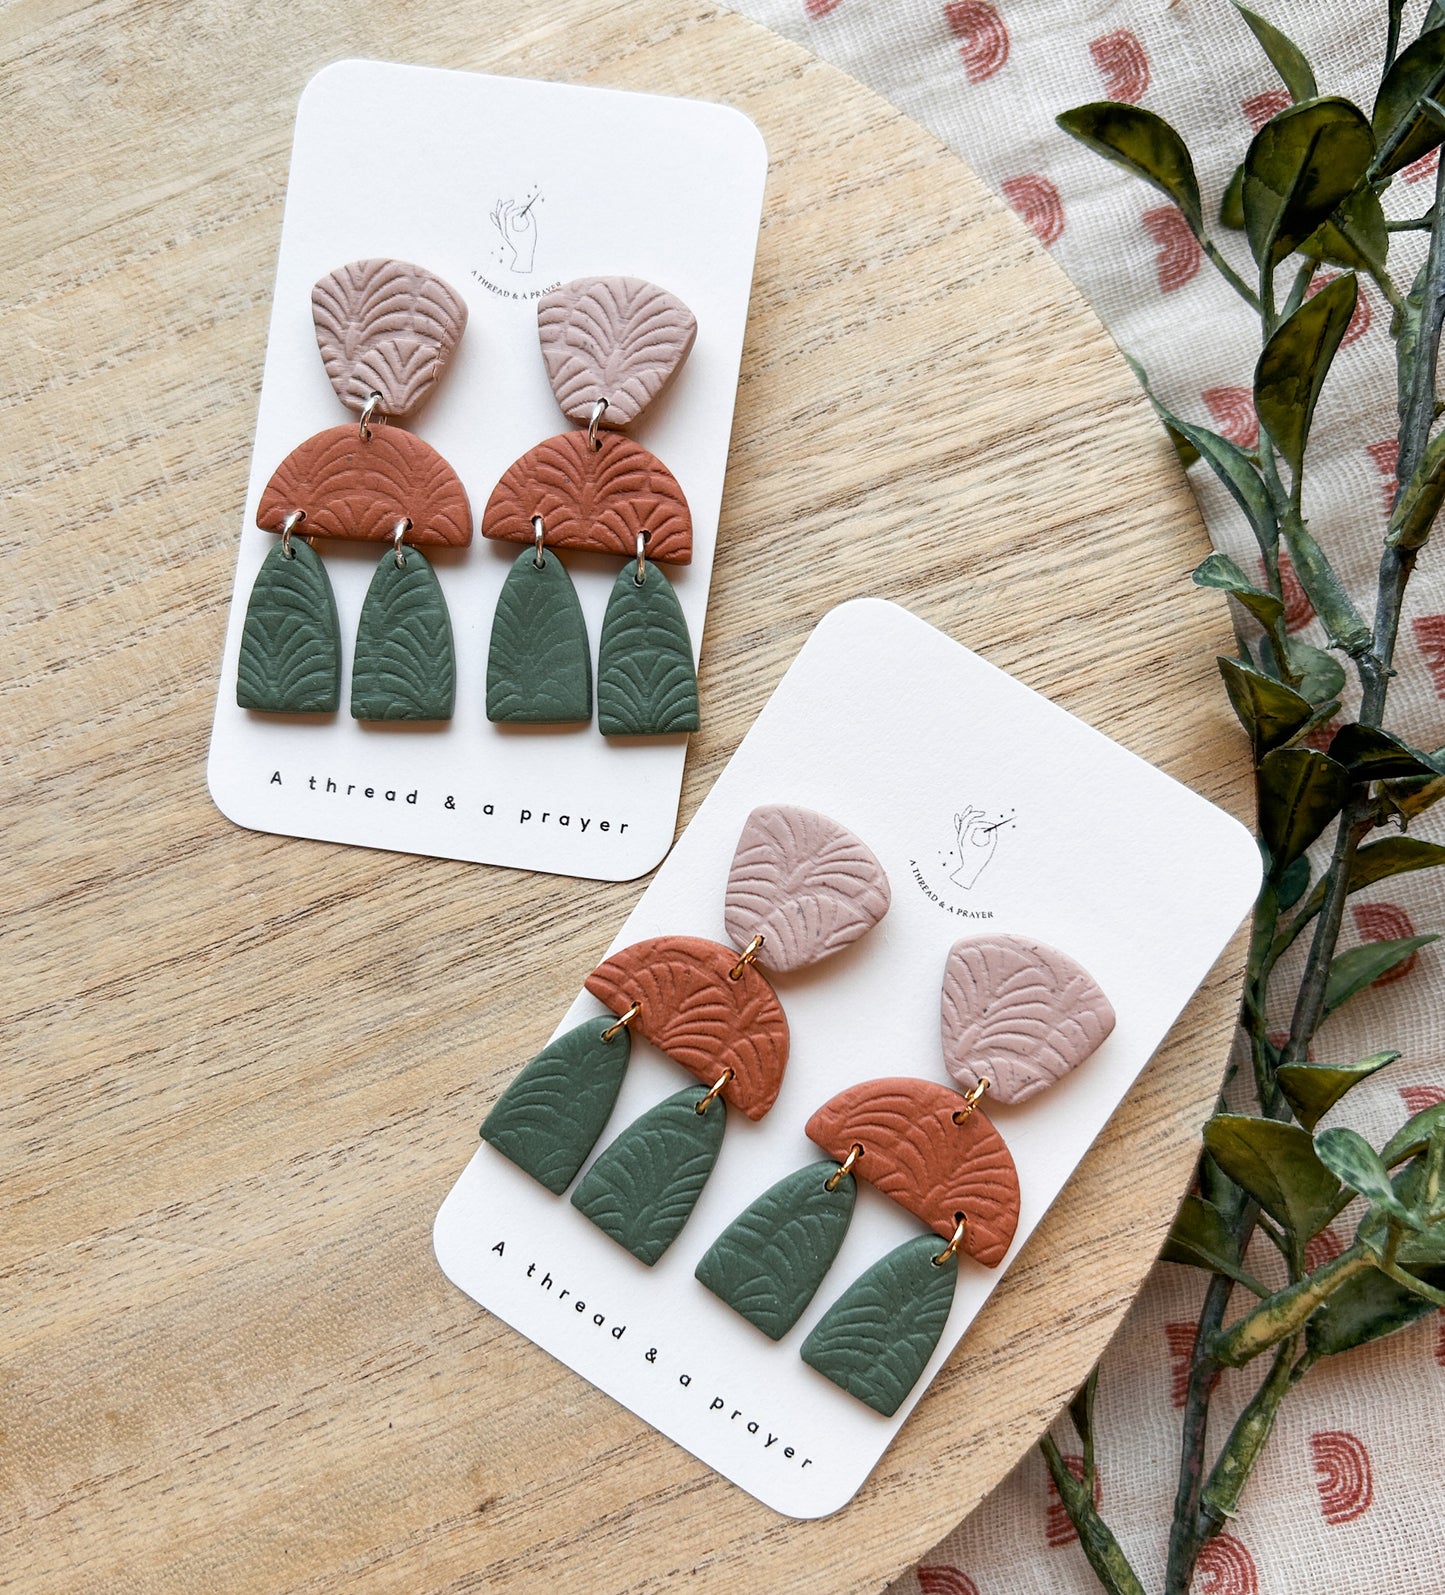 Boho Harvest Clay Earrings | Fall Fashion | Autumn Color Earrings | Statement Earrings | Lightweight